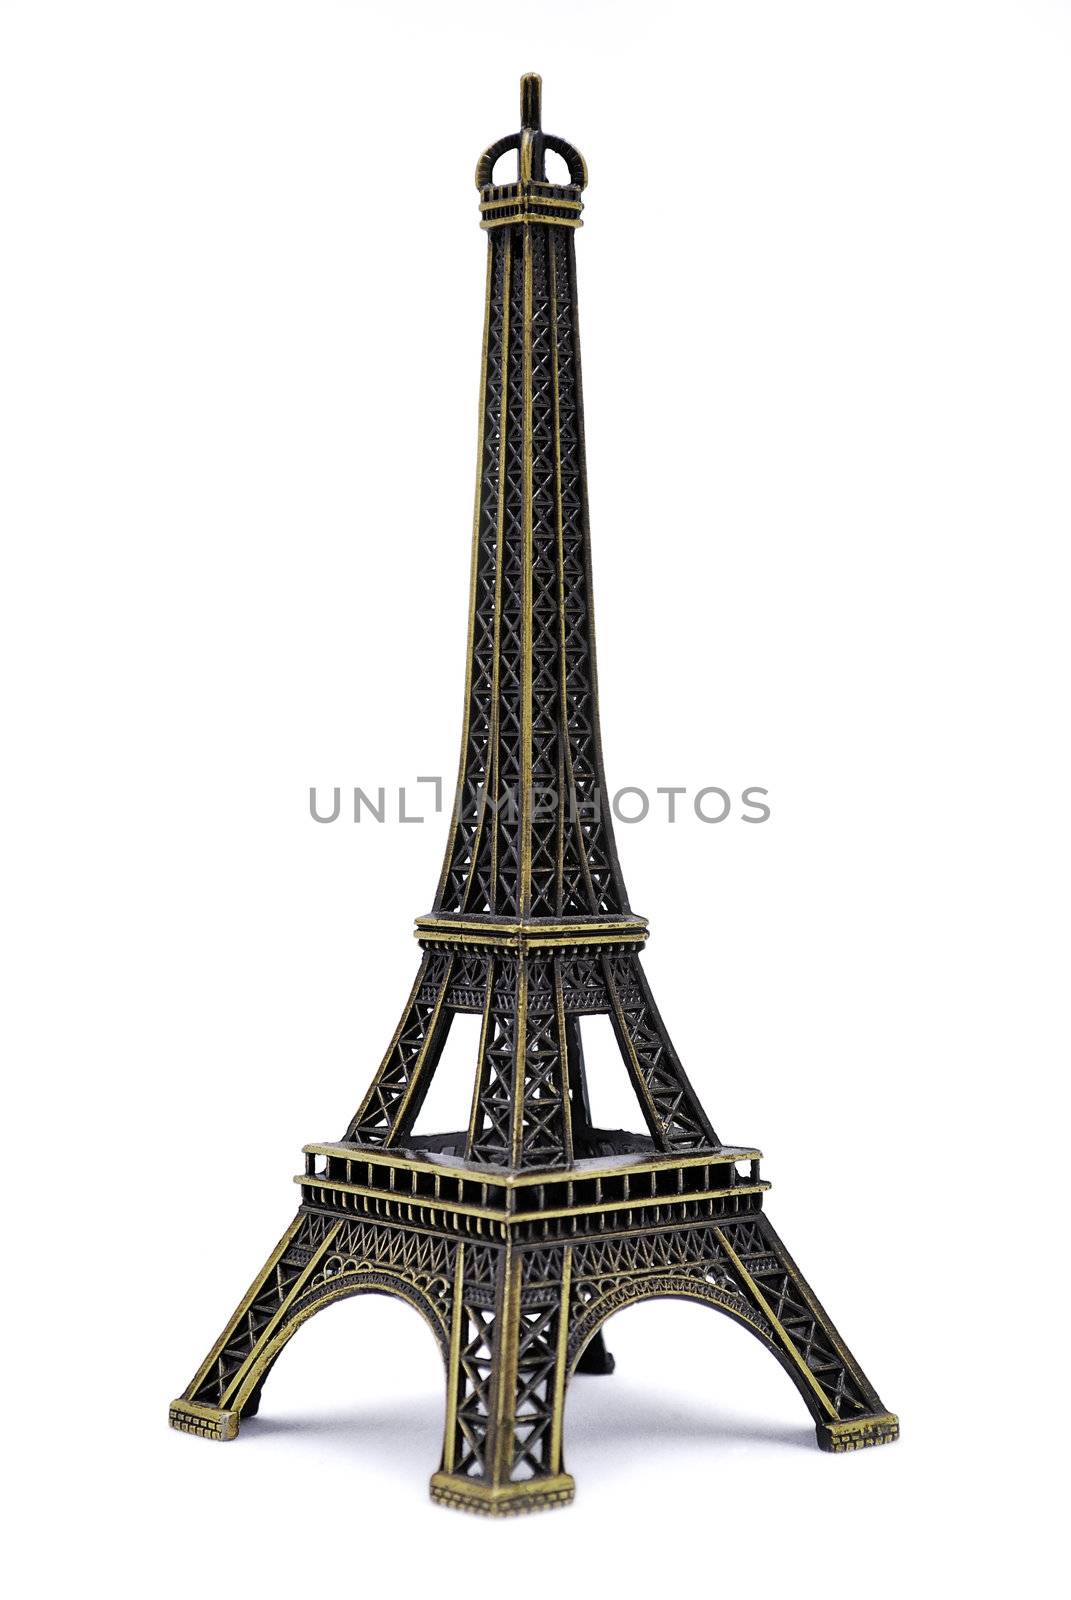 Eiffel Tower by vetkit